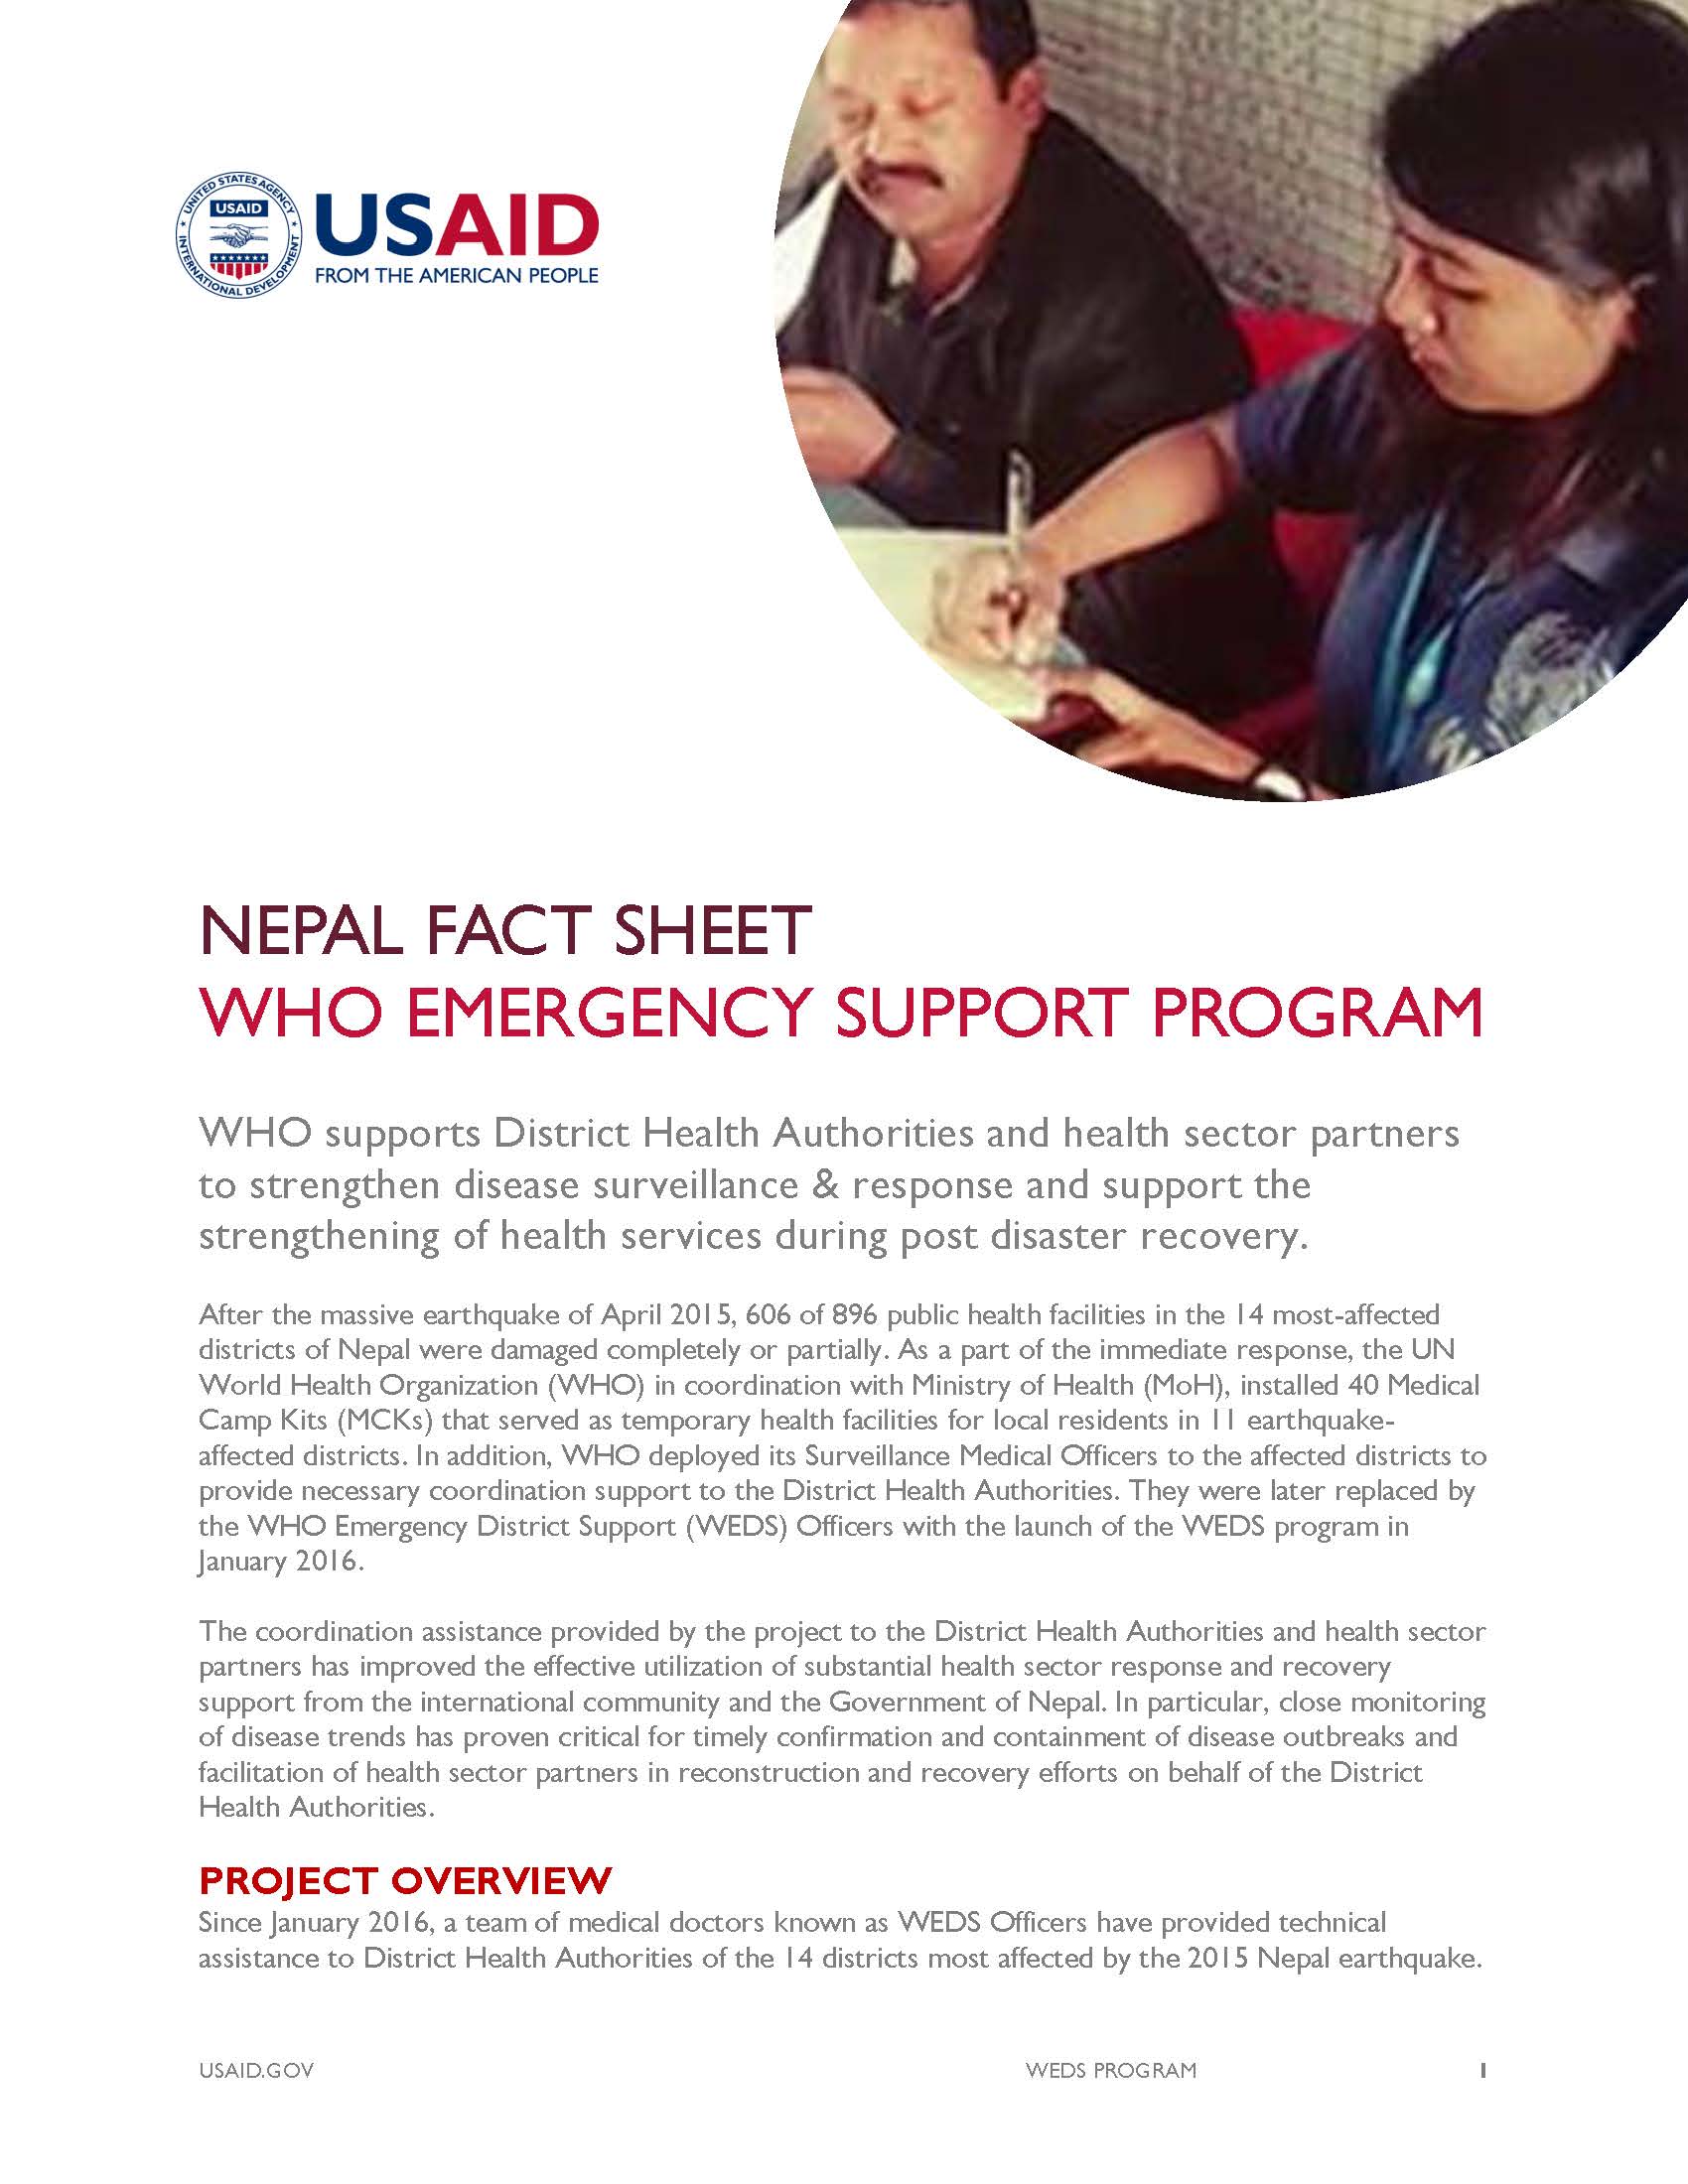 Fact Sheet: WHO EMERGENCY SUPPORT PROGRAM